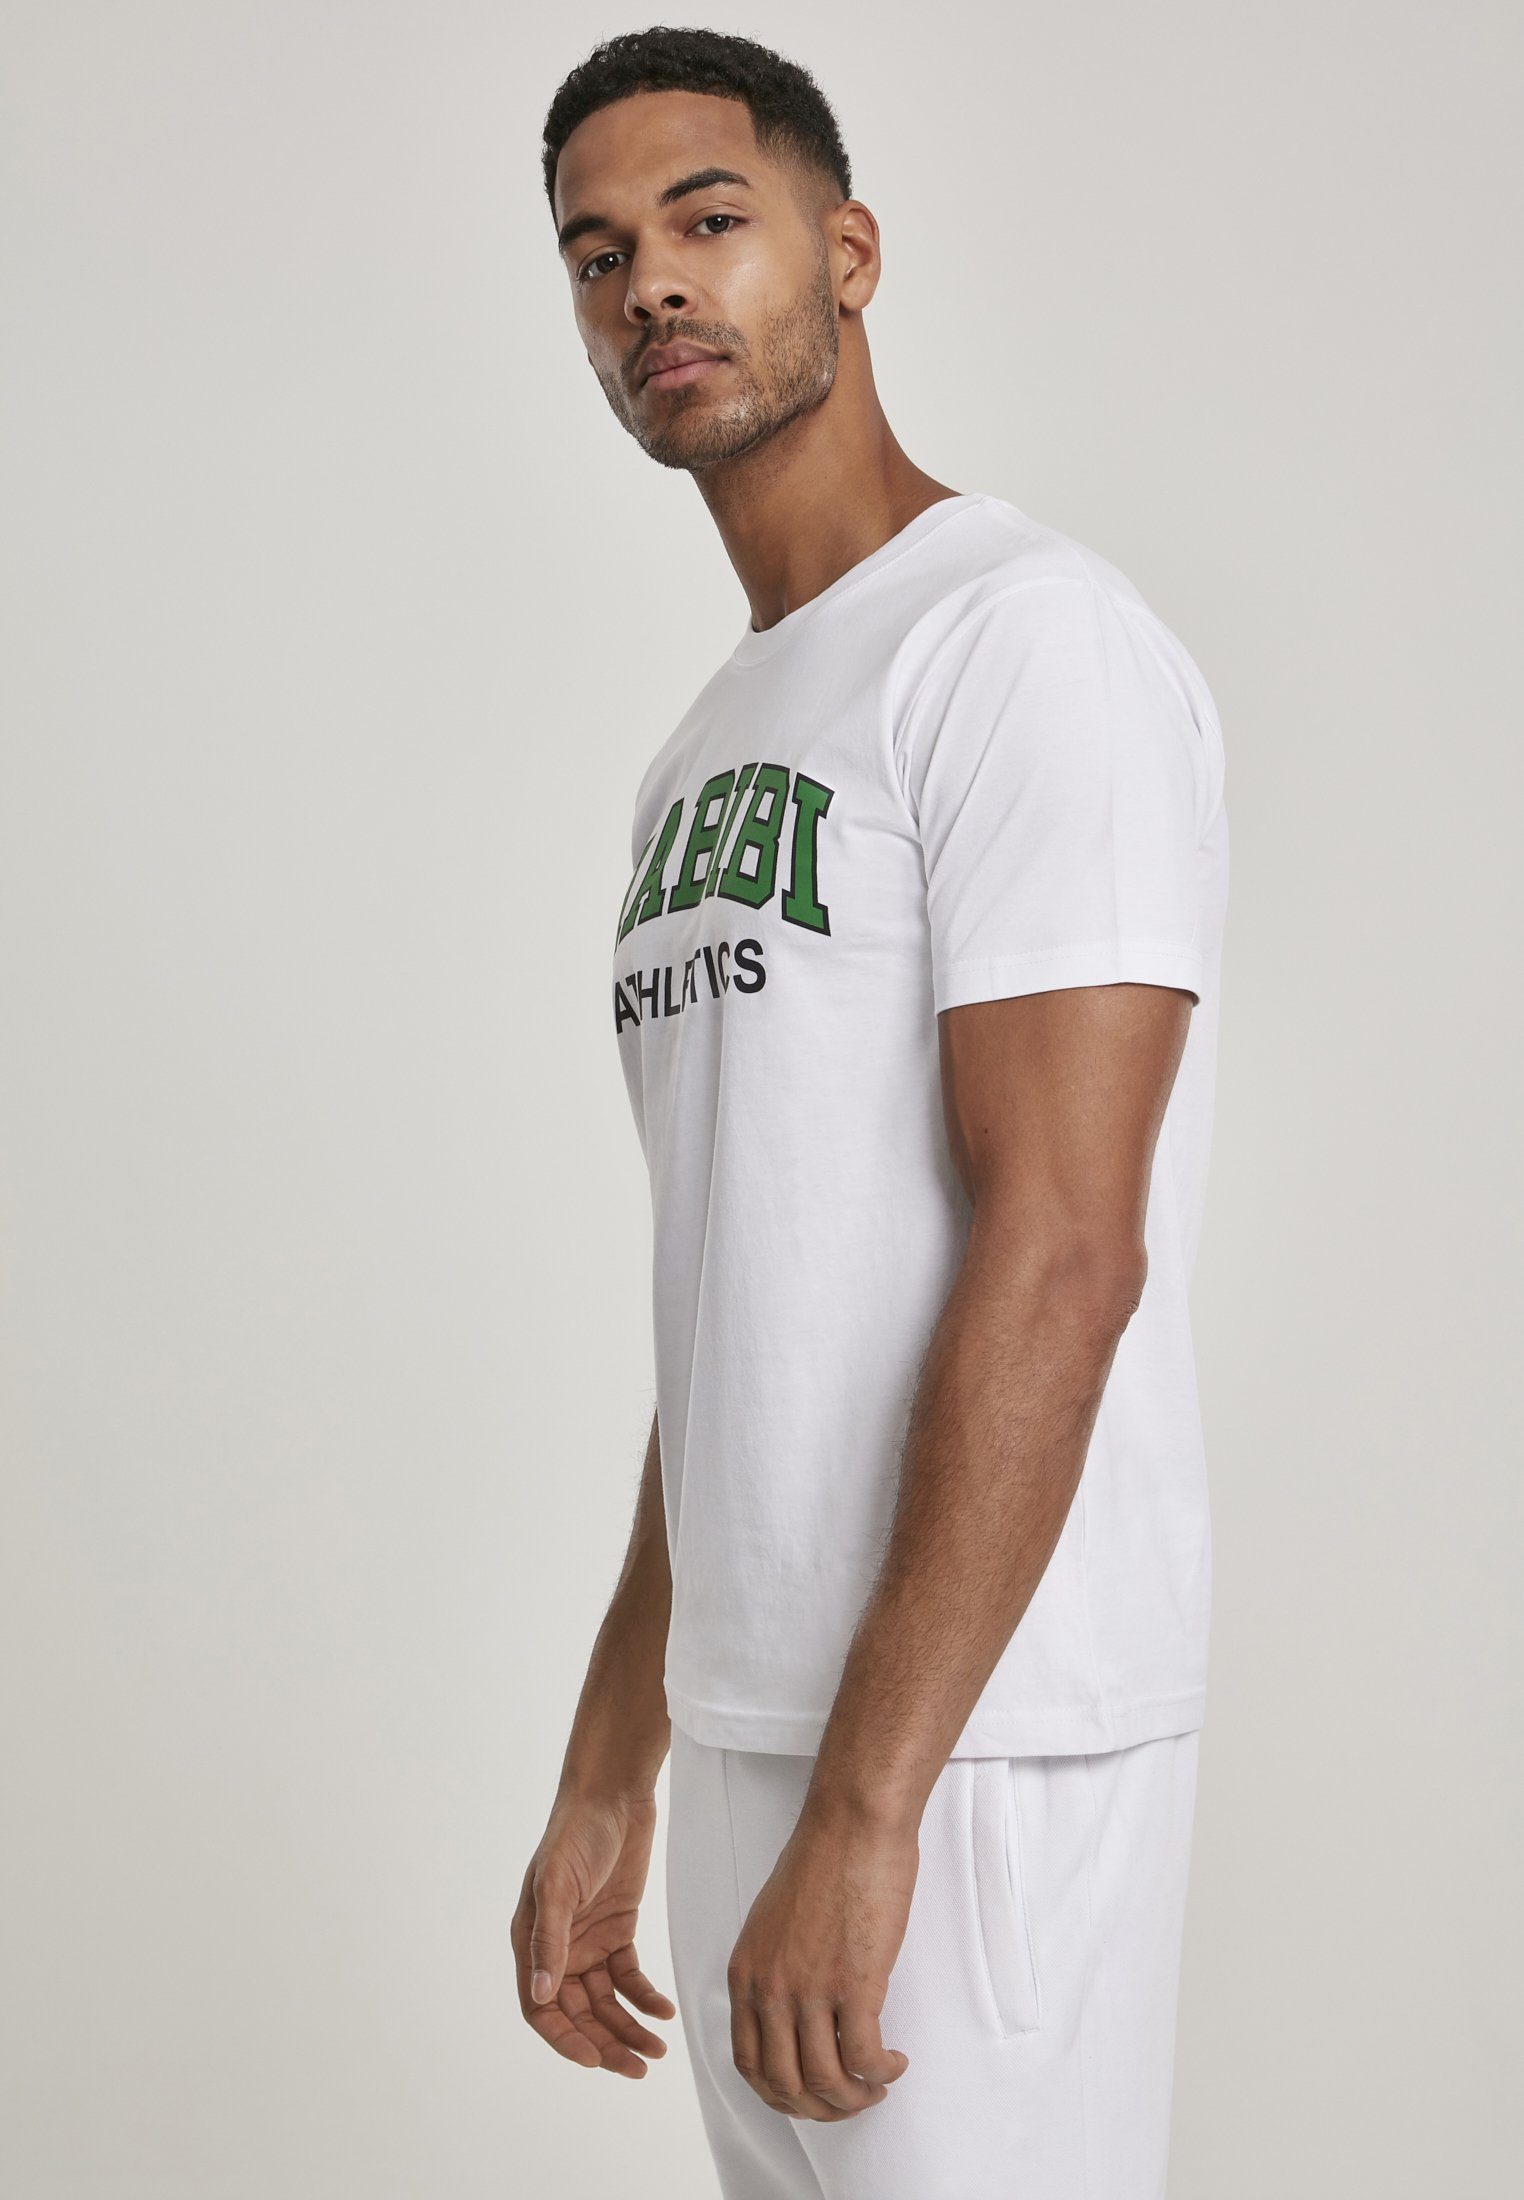 MisterTee T-Shirt Herren Tee white Athletics (1-tlg) Habibi